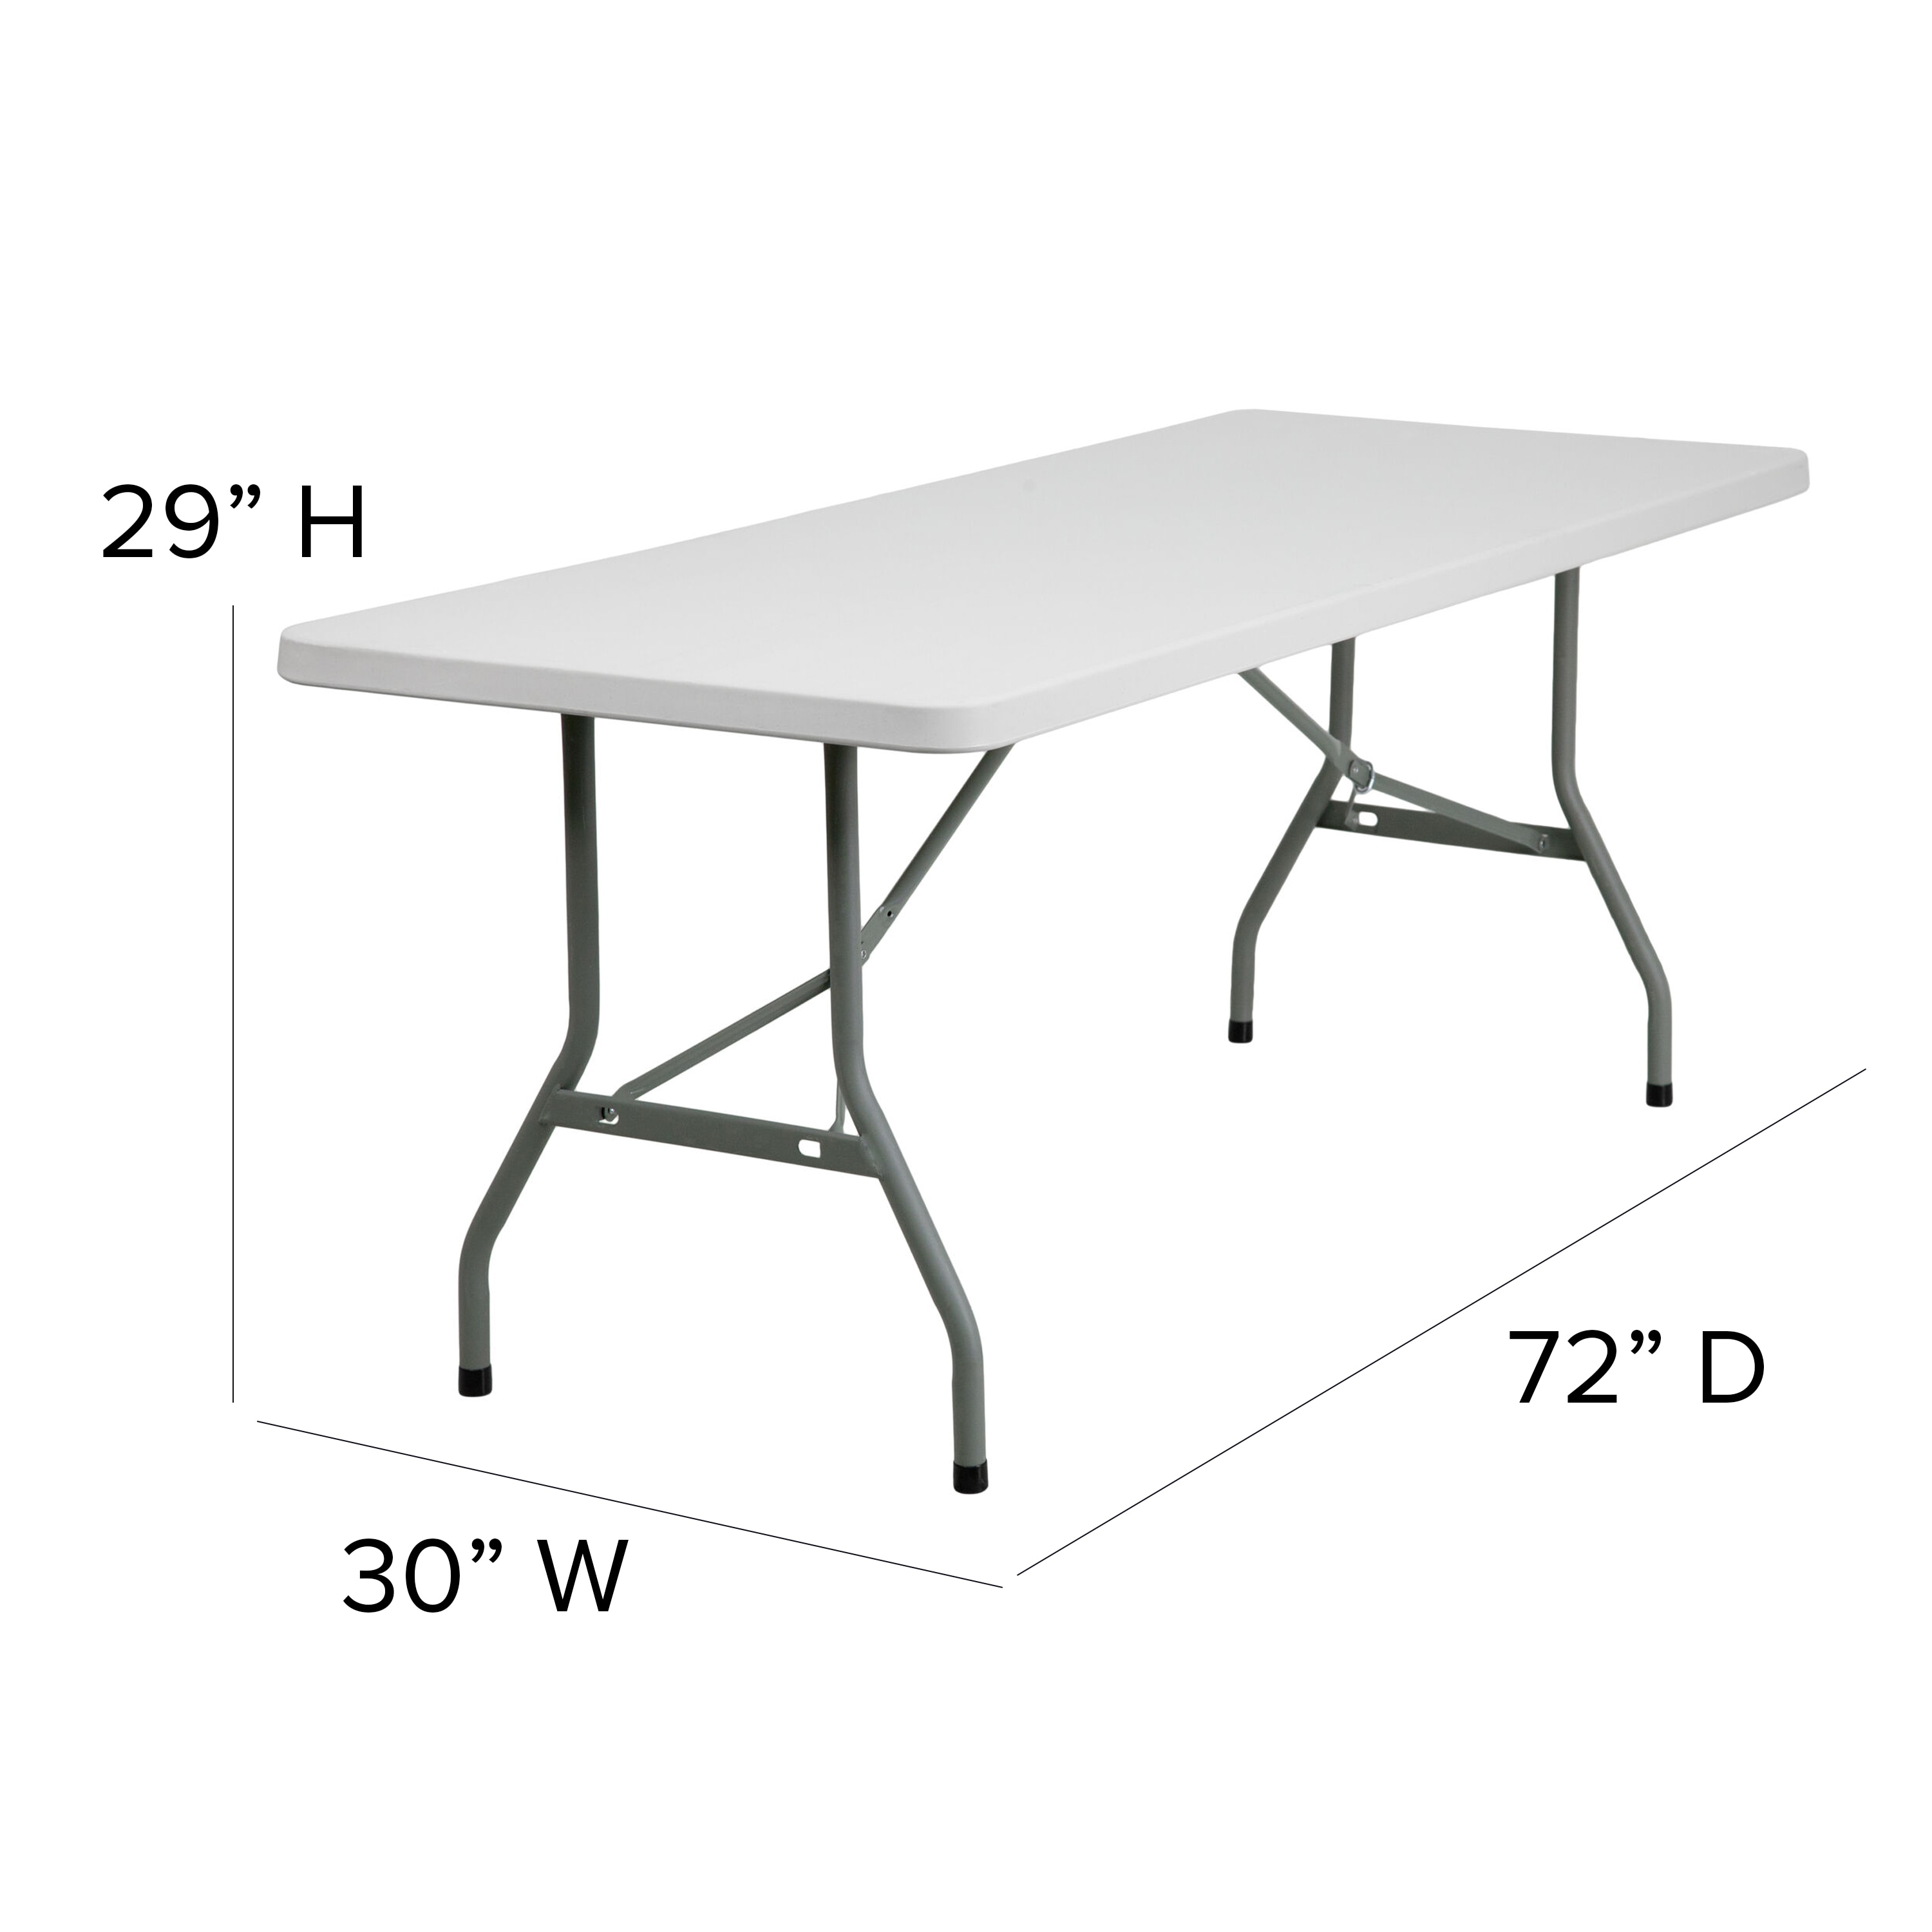 30"x 72" Granite White Plastic Folding Table Banquet Table 